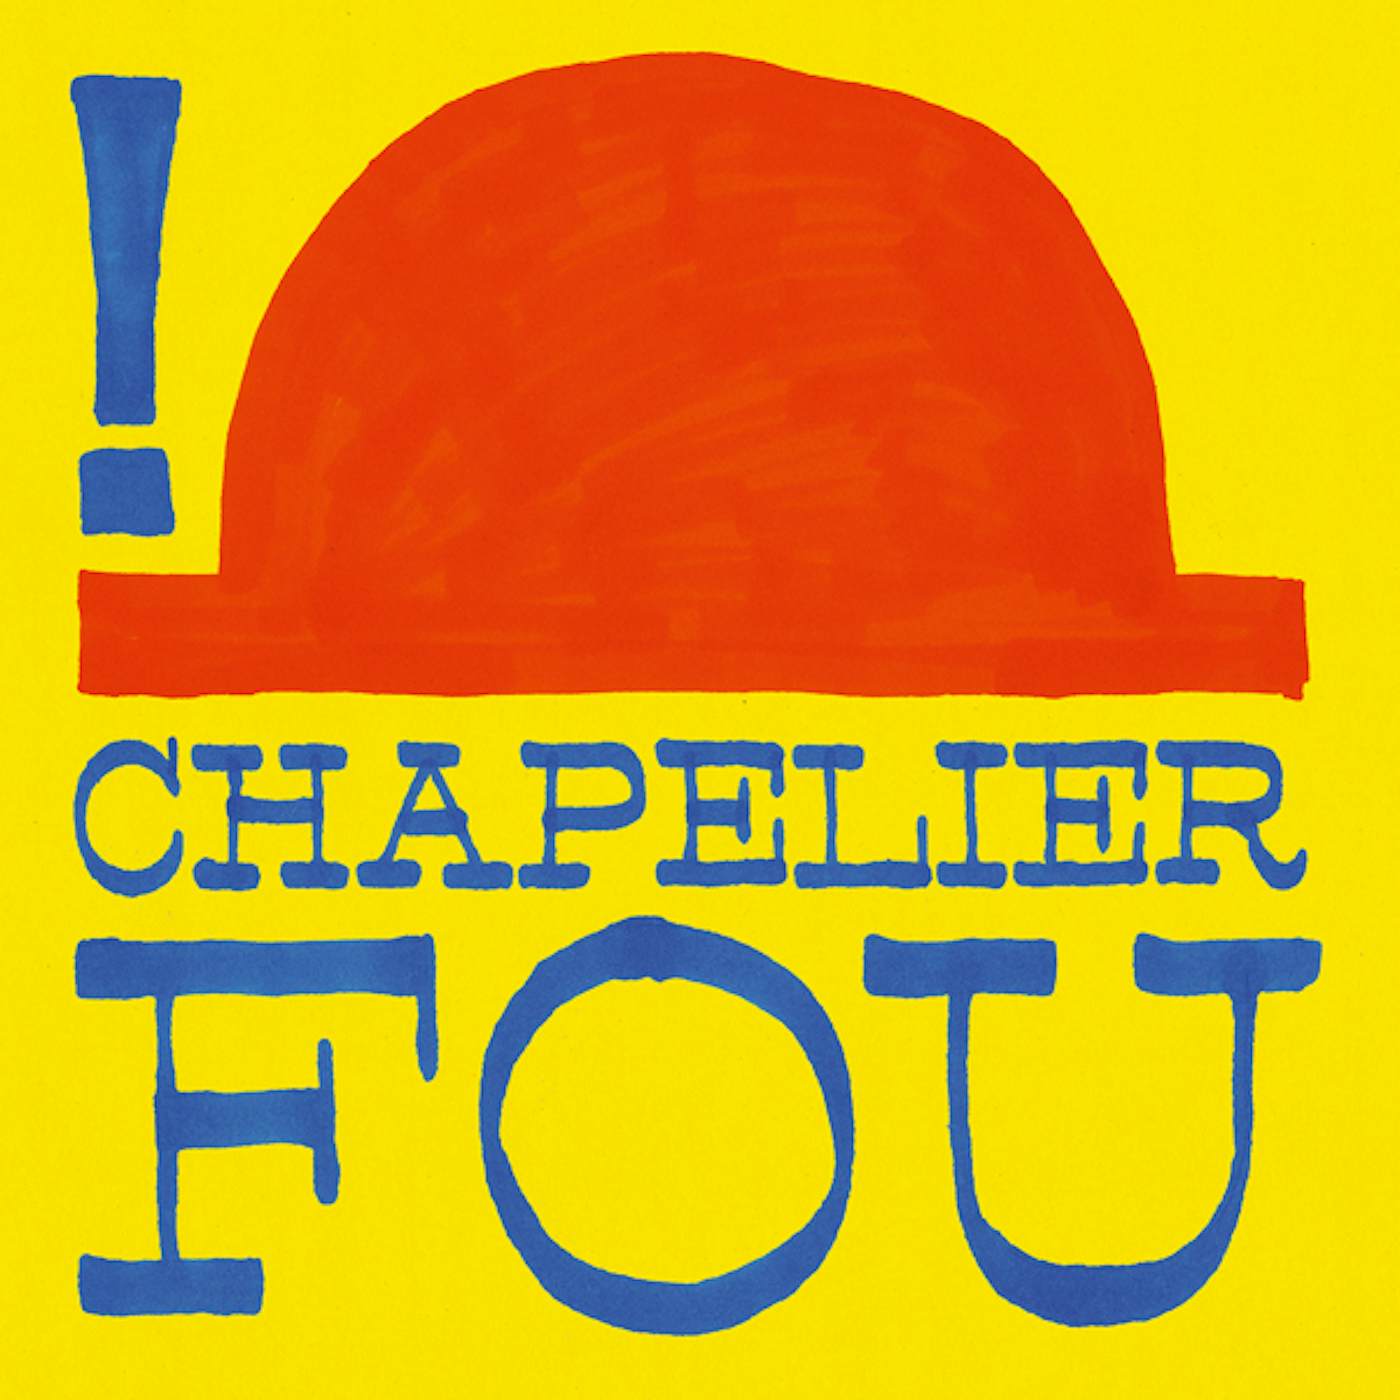 Chapelier Fou ! Vinyl Record